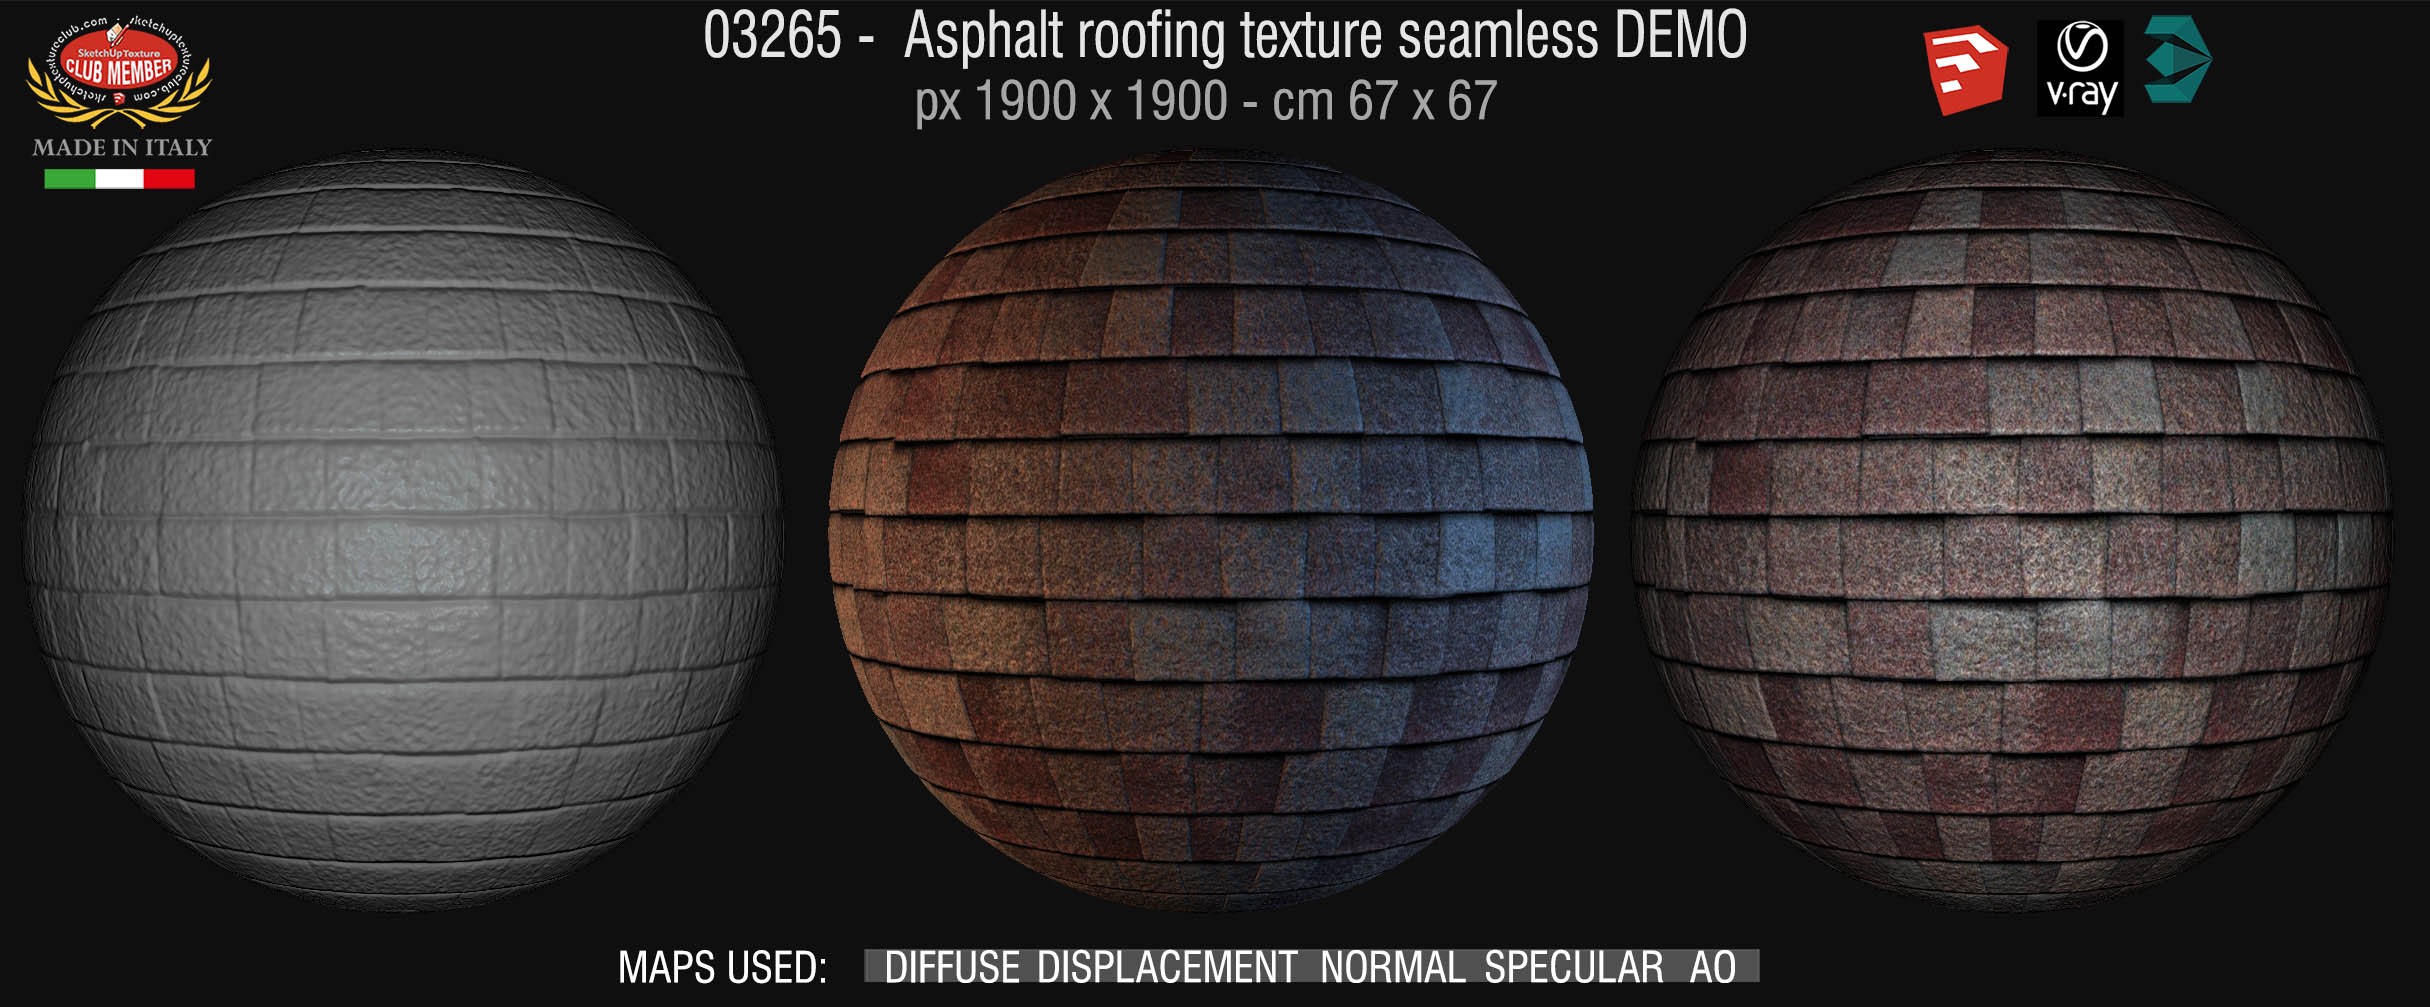 03265 Asphalt roofing texture seamless + maps DEMO